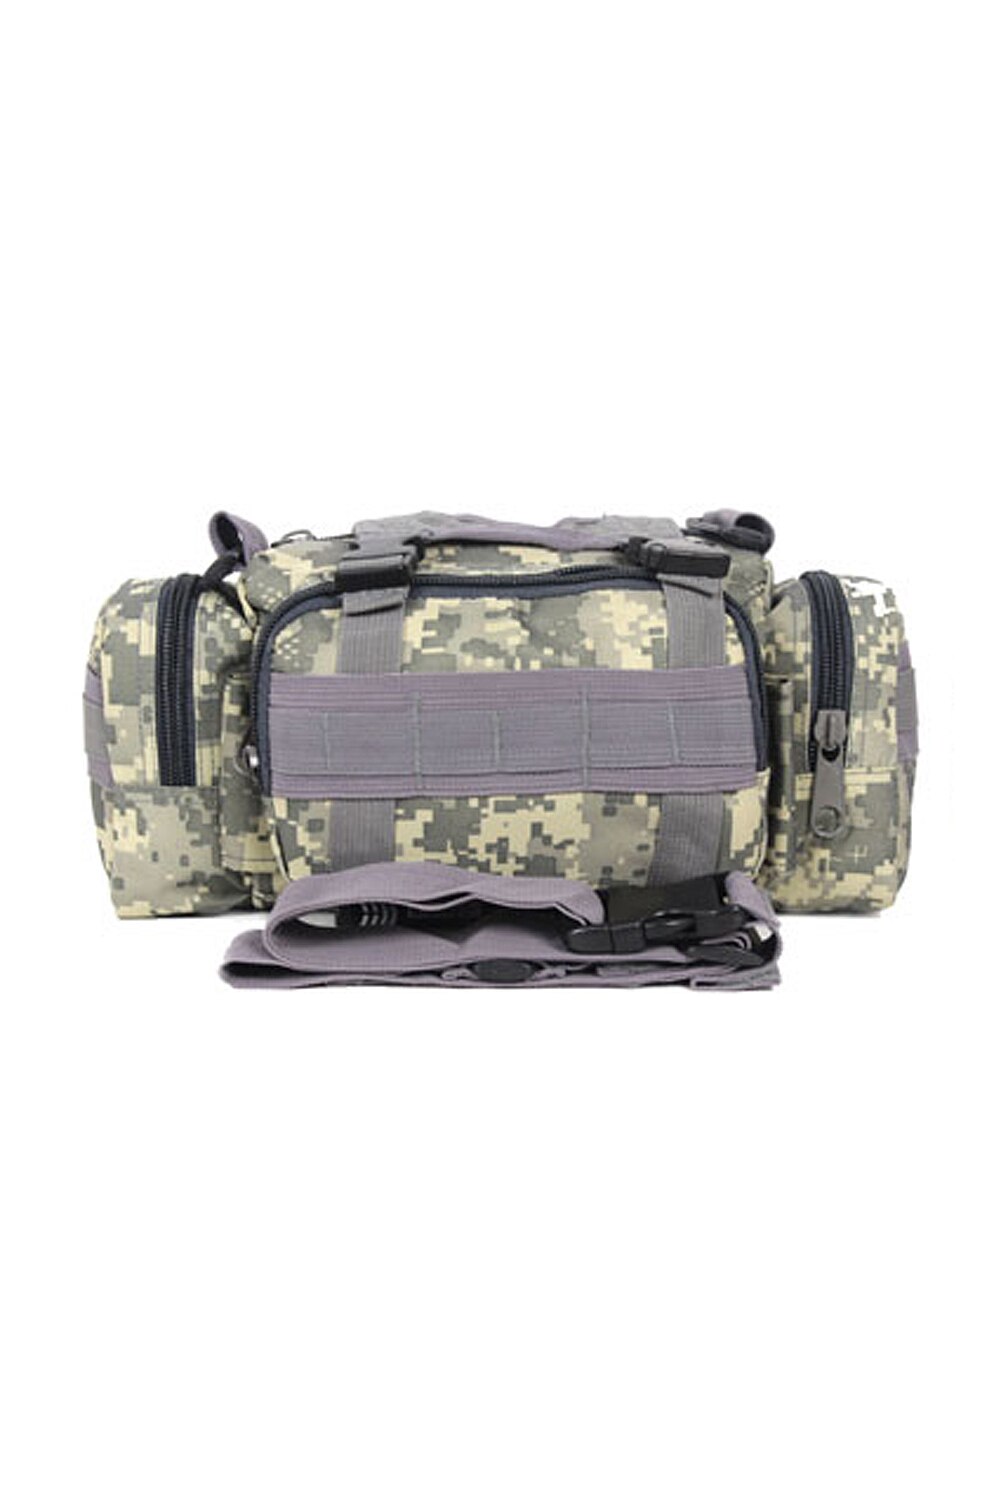 Men  Waist Pack Shoulder Bag Handbag Military Casual    Multi-purpose Bag ACU Camouflage - ebowsos